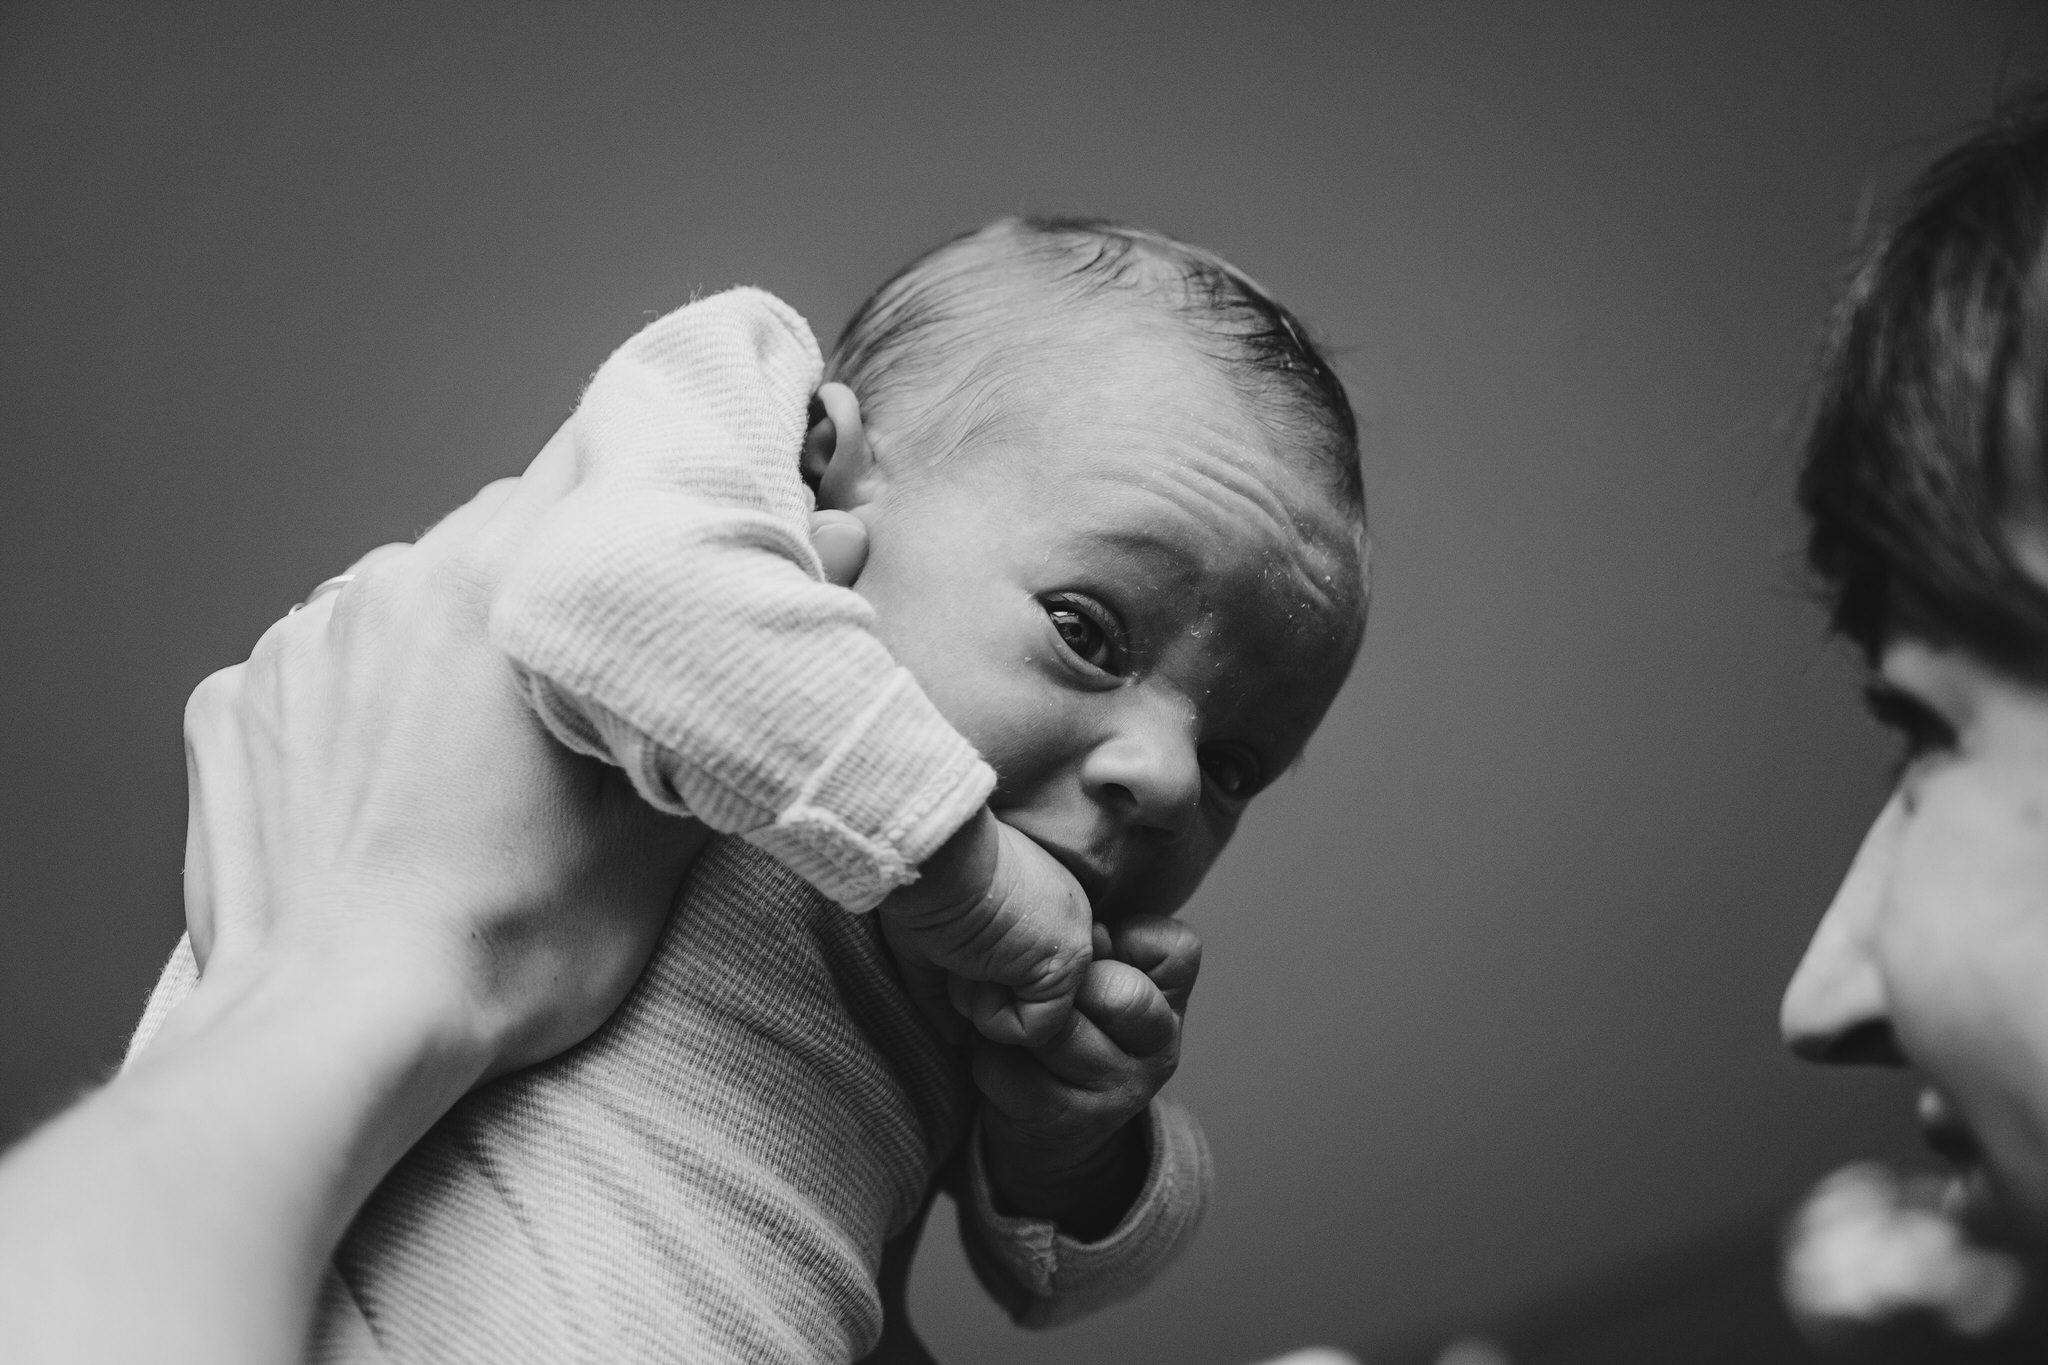 Mil newborn stijn willems photography heverlee